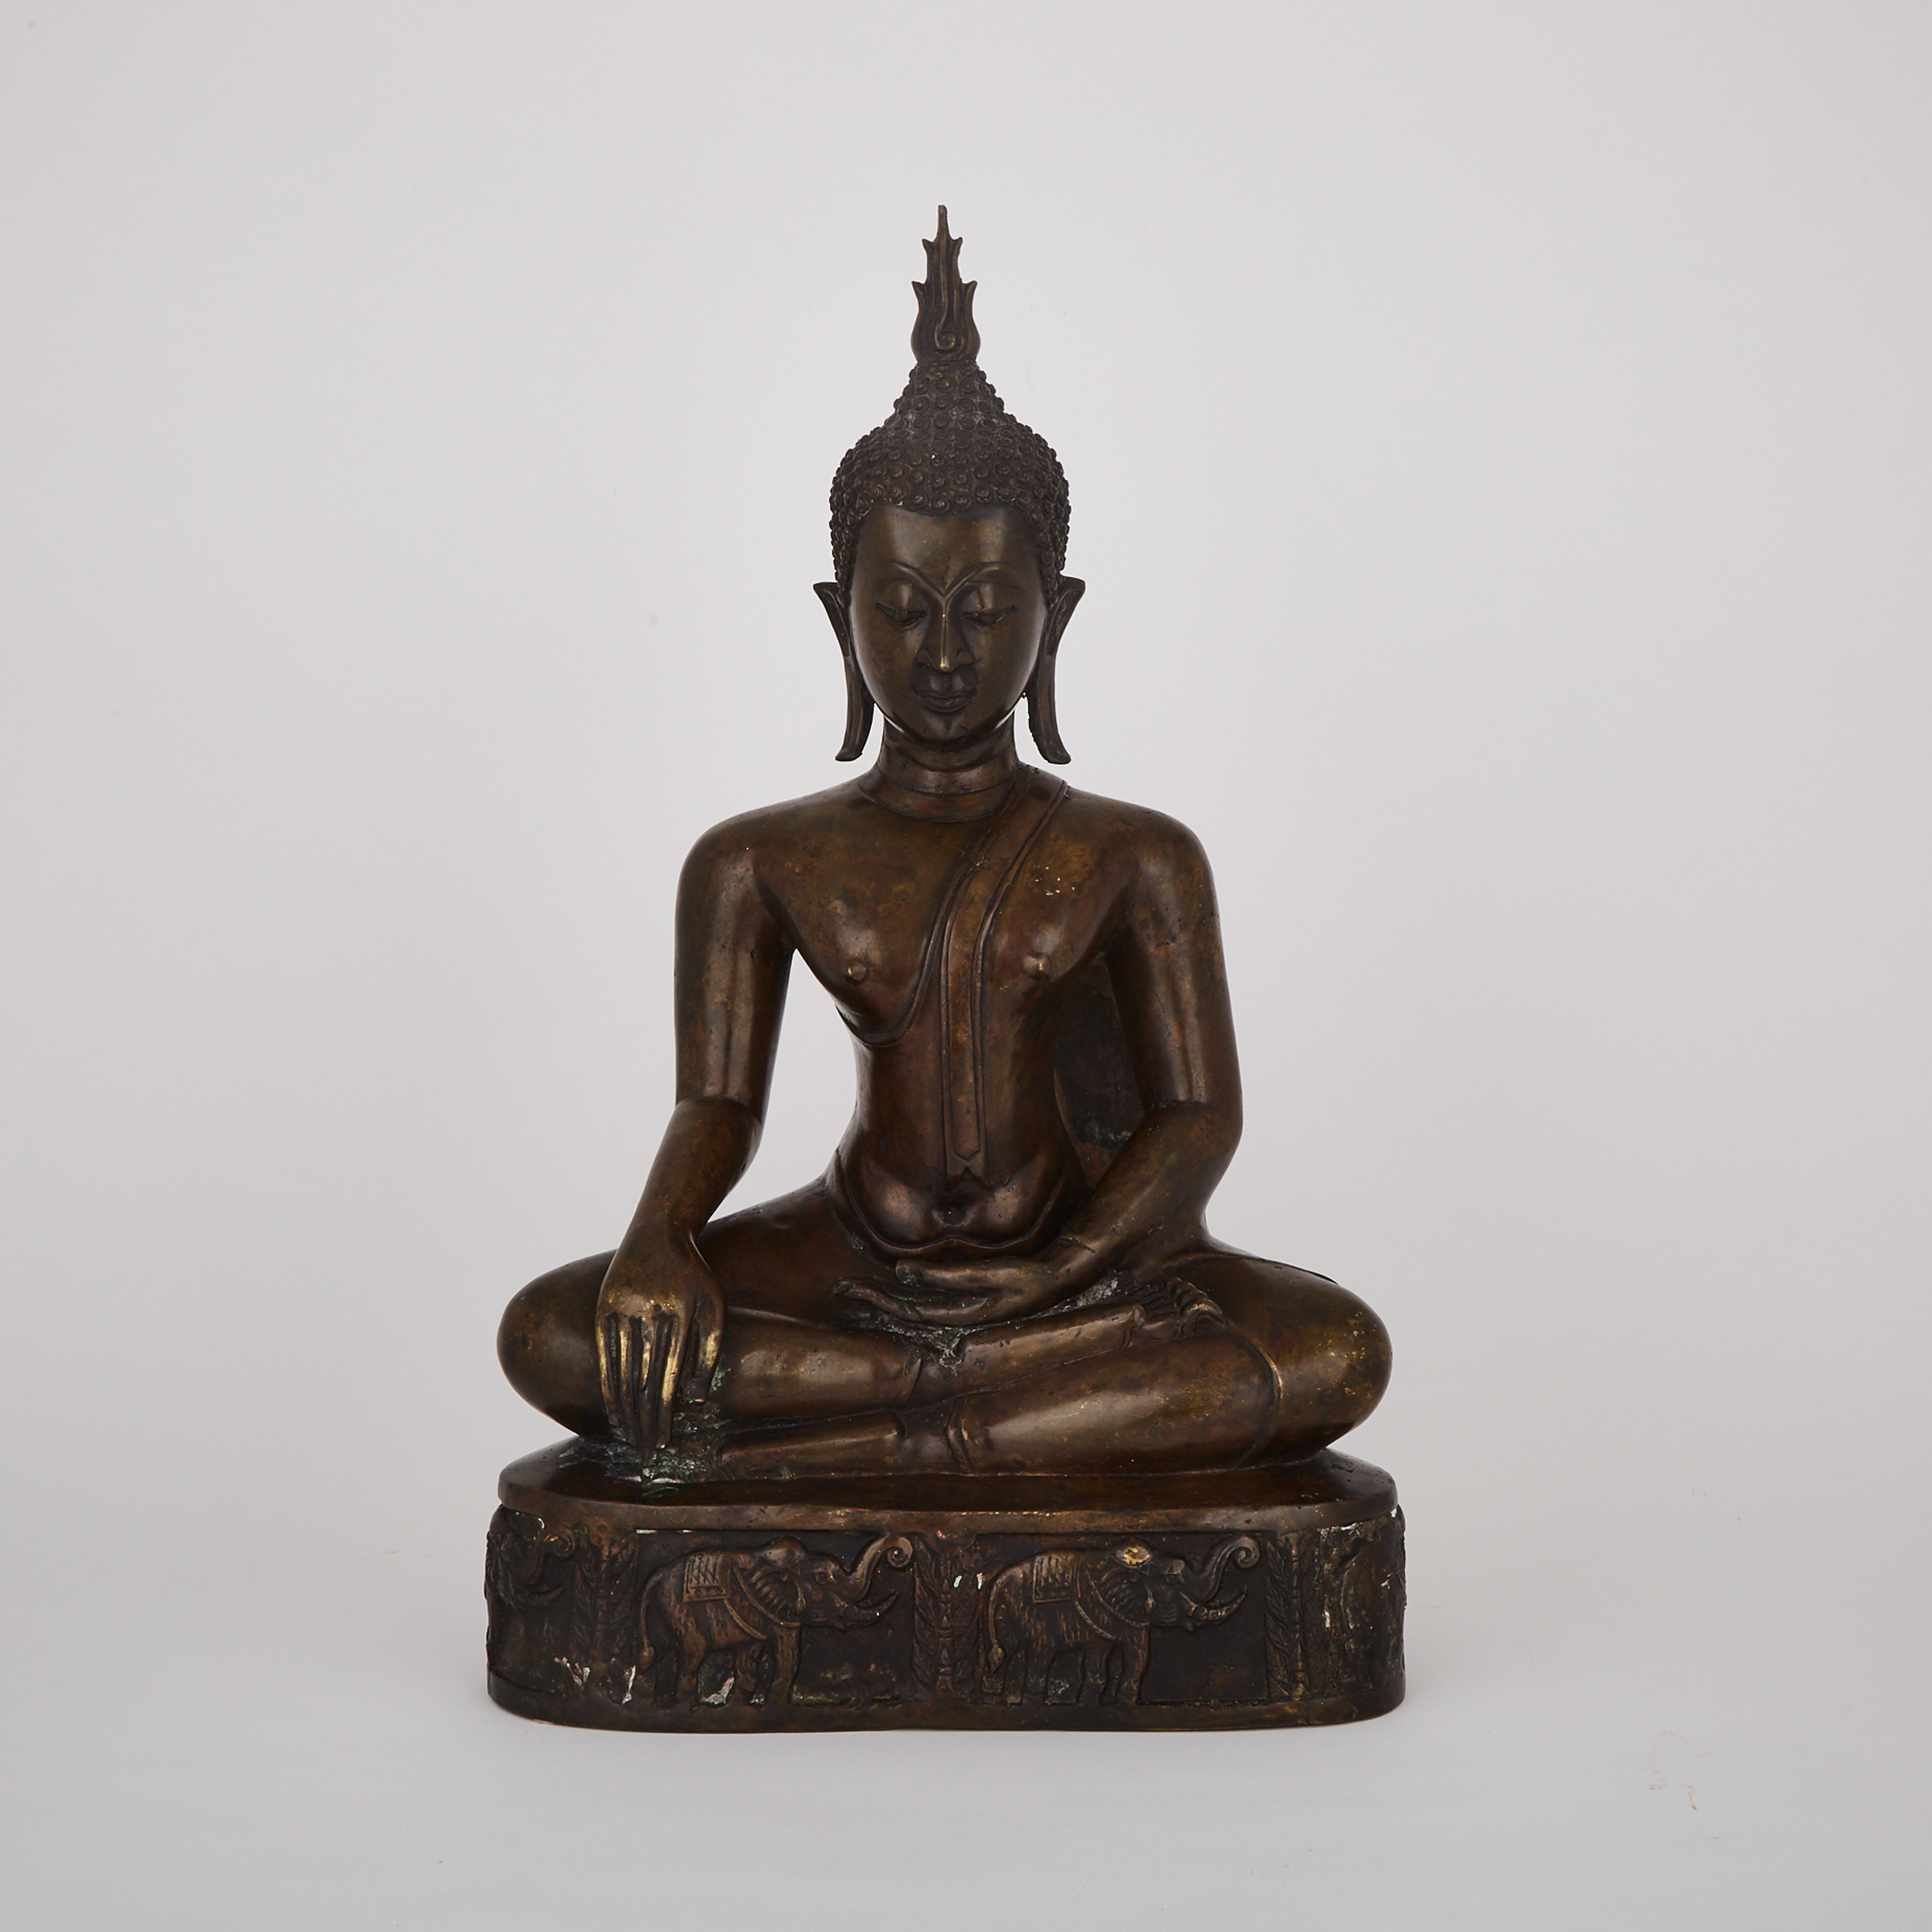 A Bronze Seated Buddha, Ayutthaya Style, Thailand, 18th/19th Century